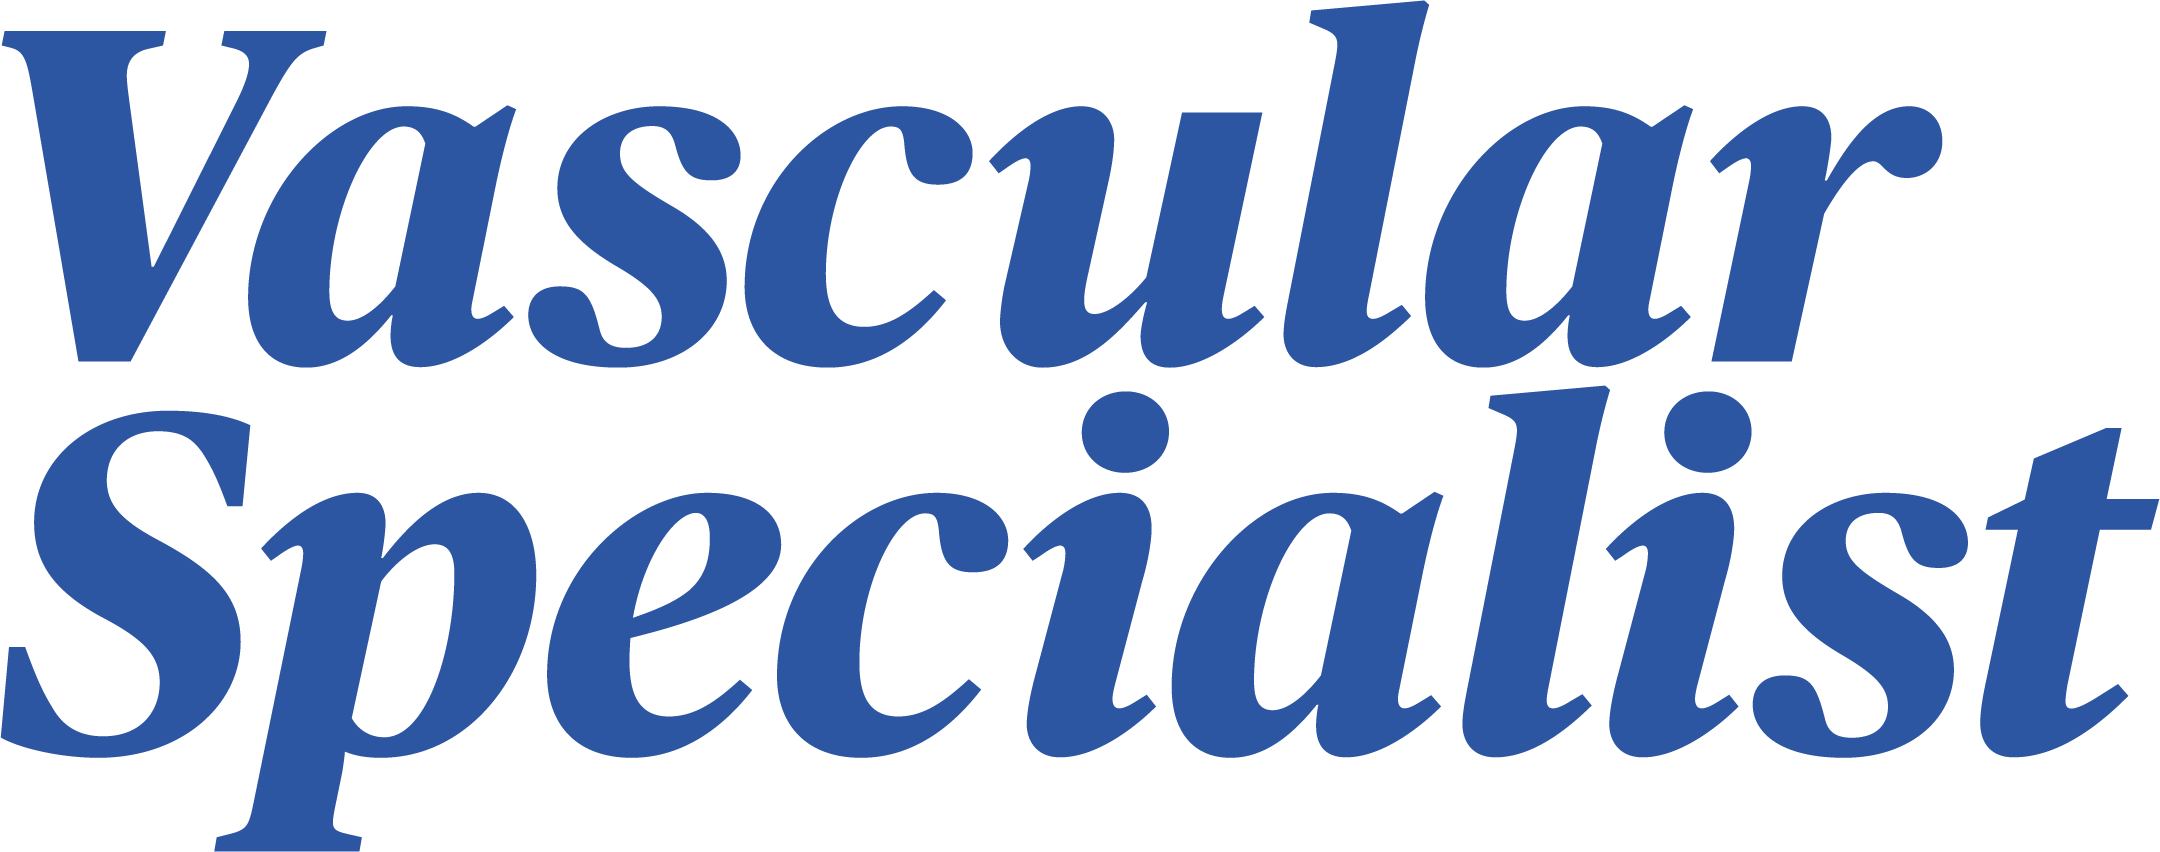 Vascular Specialist online